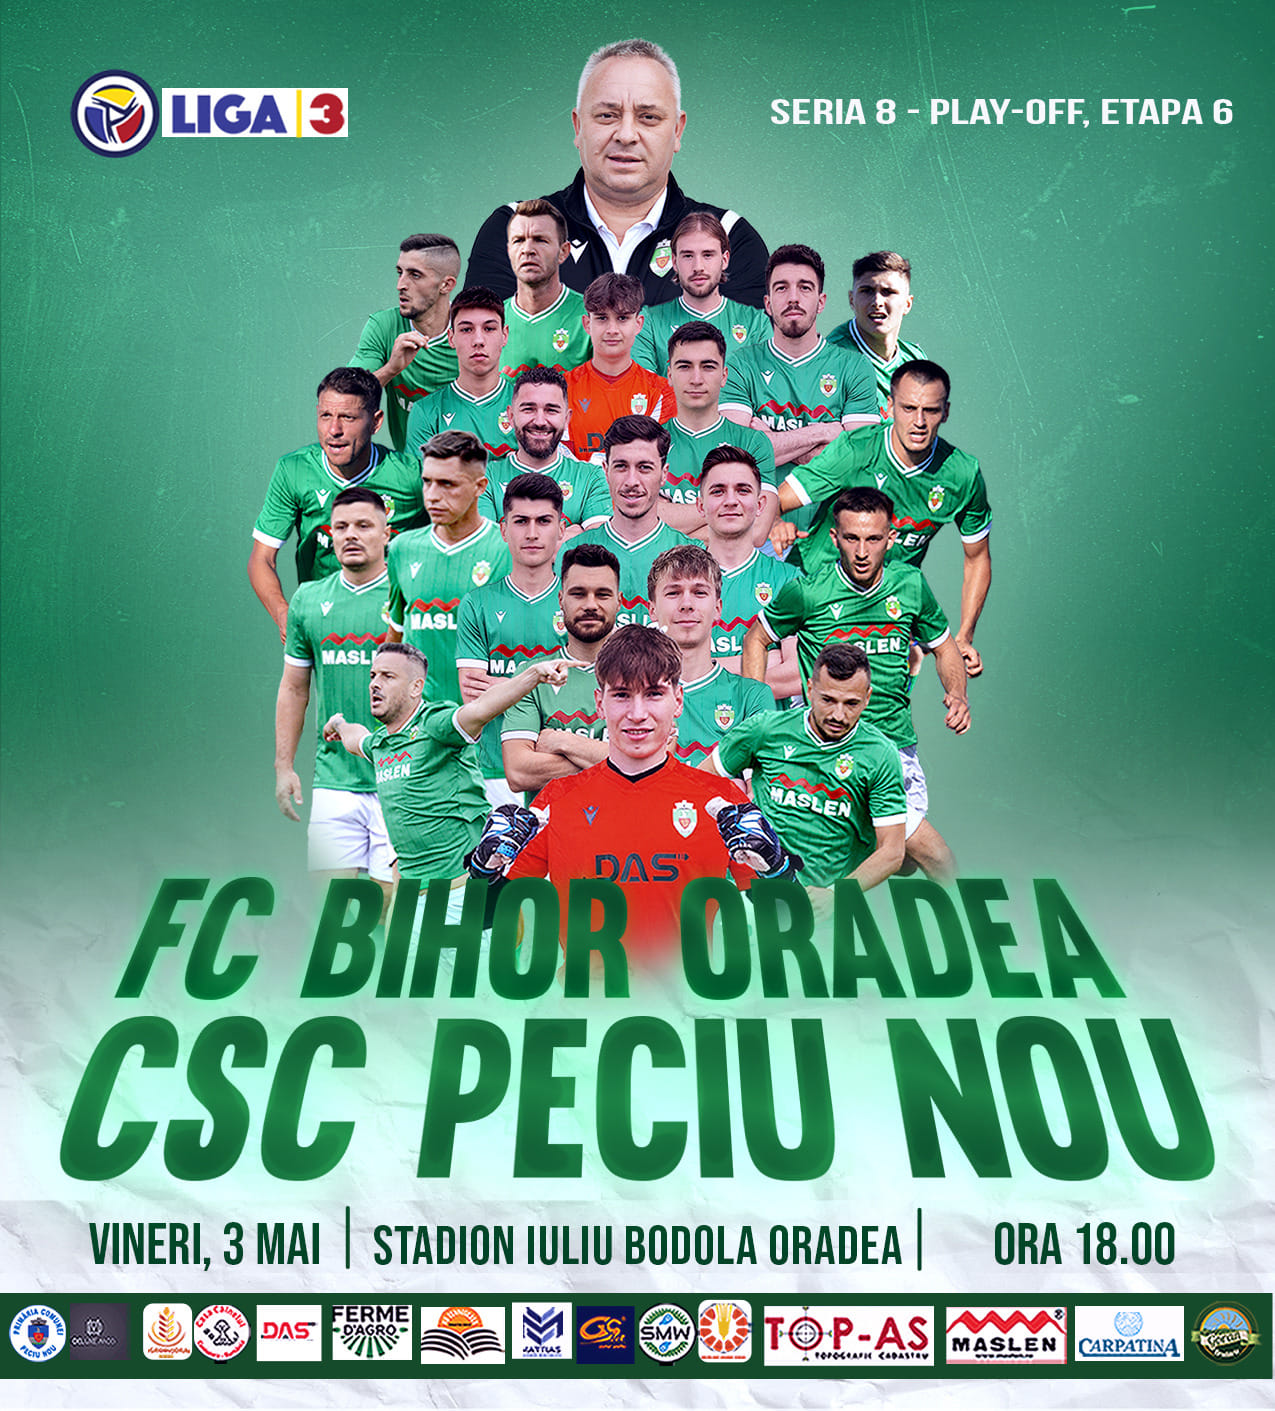 FC Bihor Oradea - CSC Peciu Nou